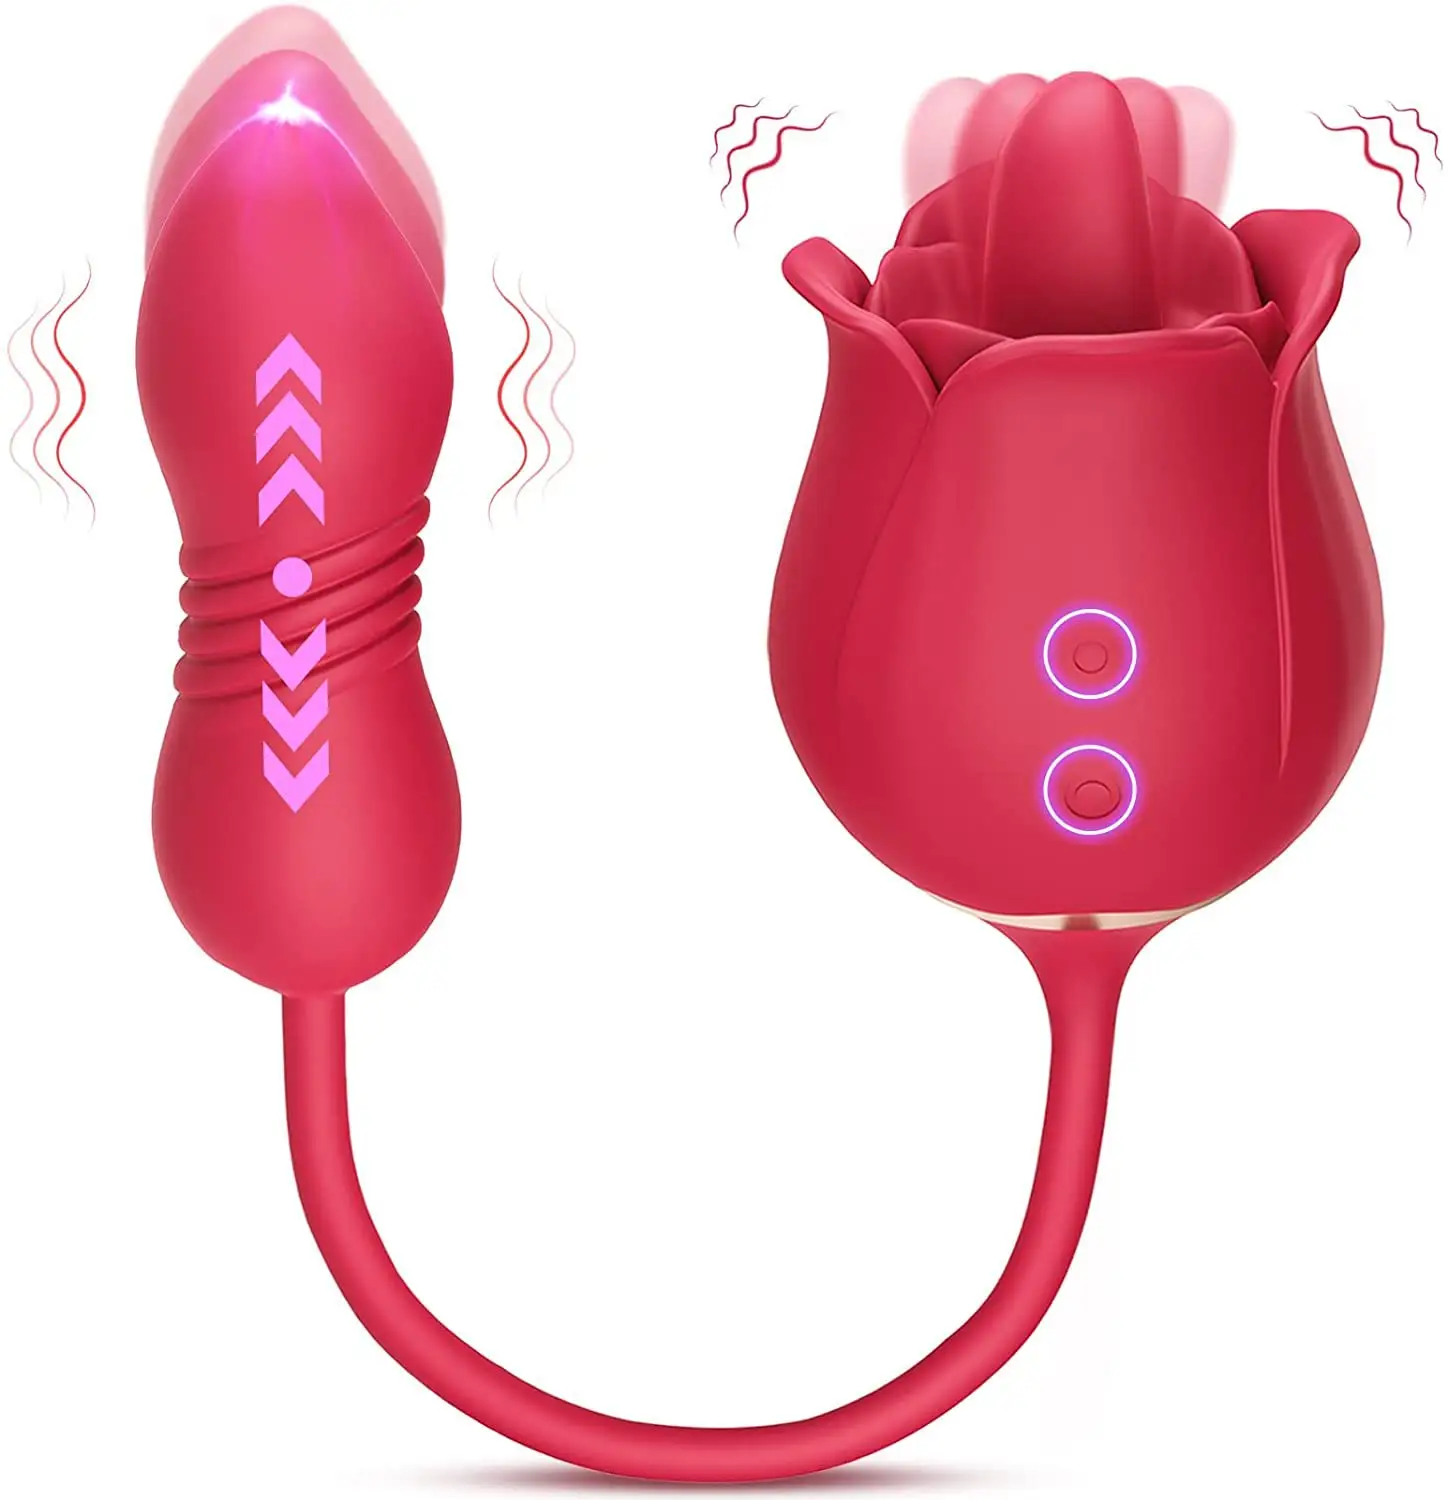 New S-hand female masturbator rose shaped tongue vibrator with price is reasonable